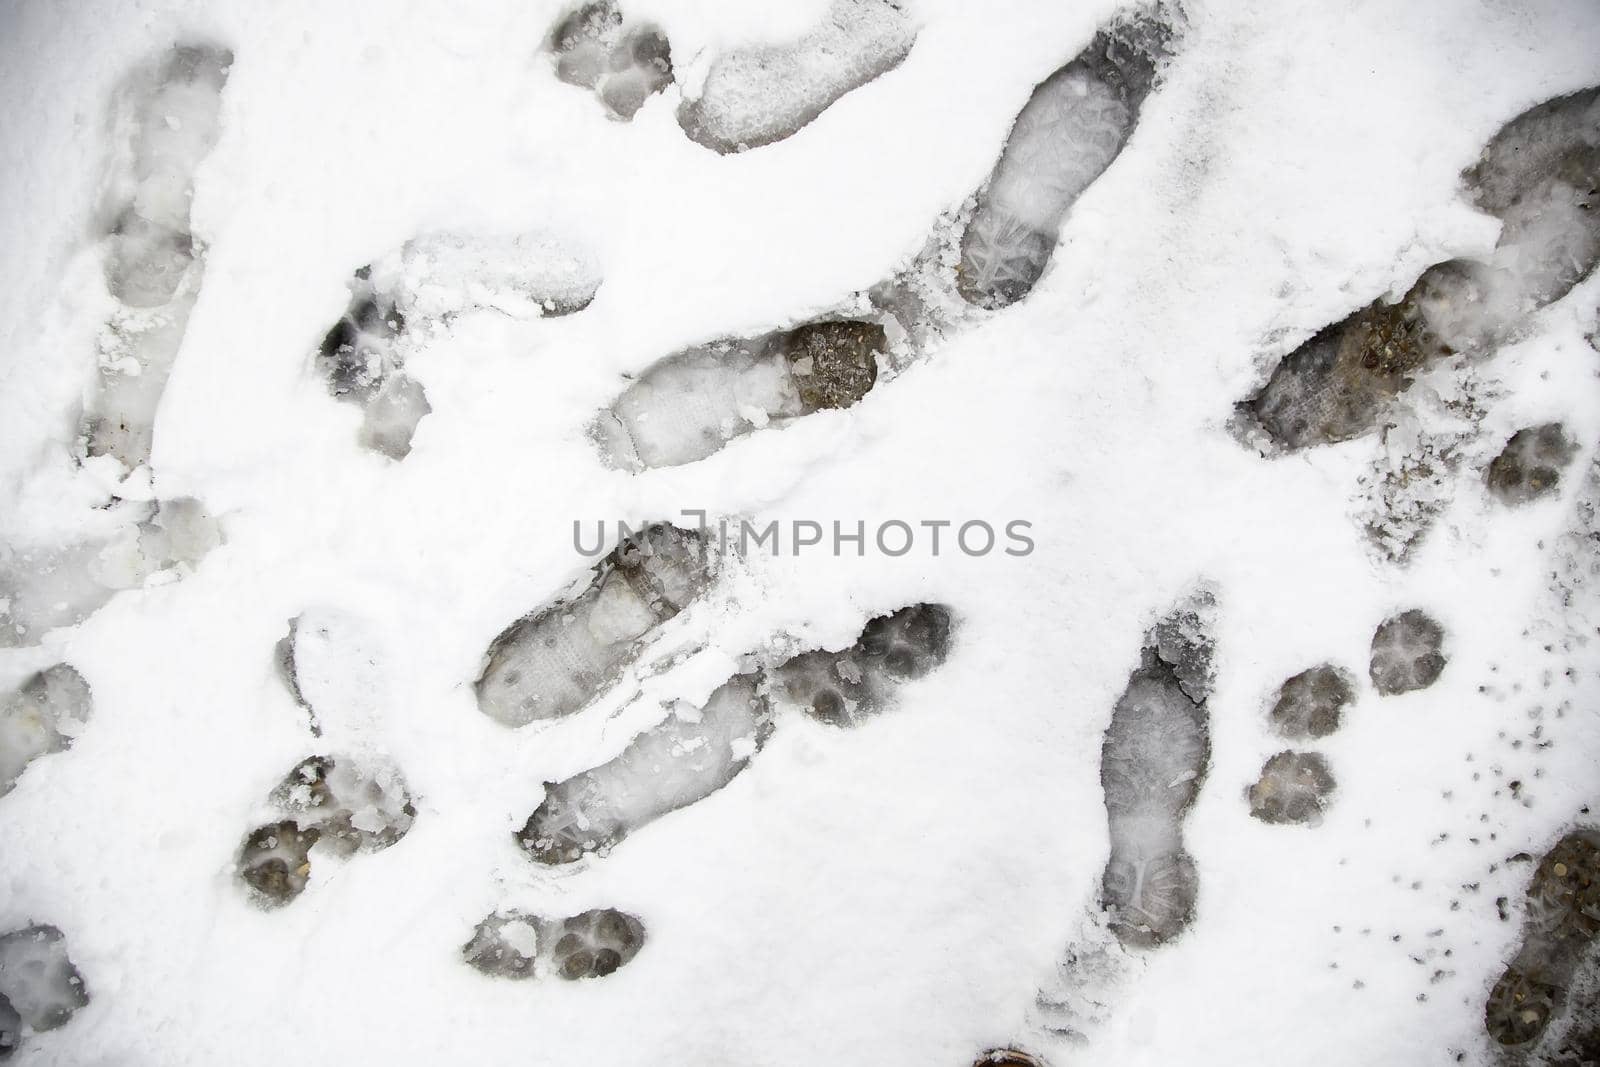 Footprints in the snow by esebene